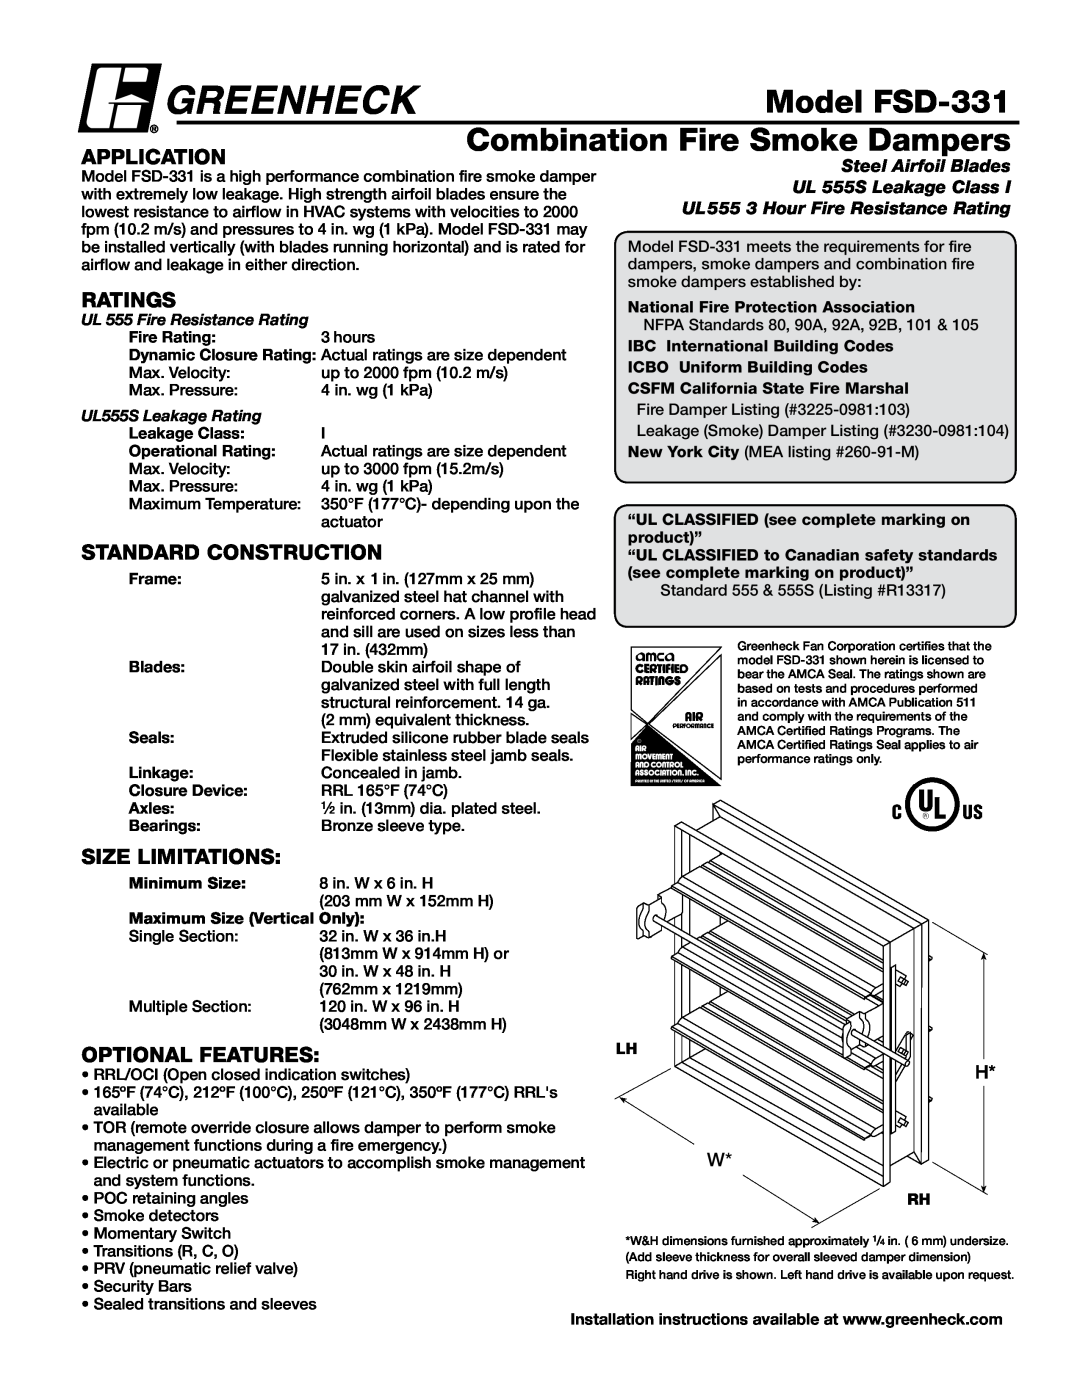 Greenheck Fan dimensions Model FSD-331, Combination Fire Smoke Dampers, Application, Ratings, Standard Construction 